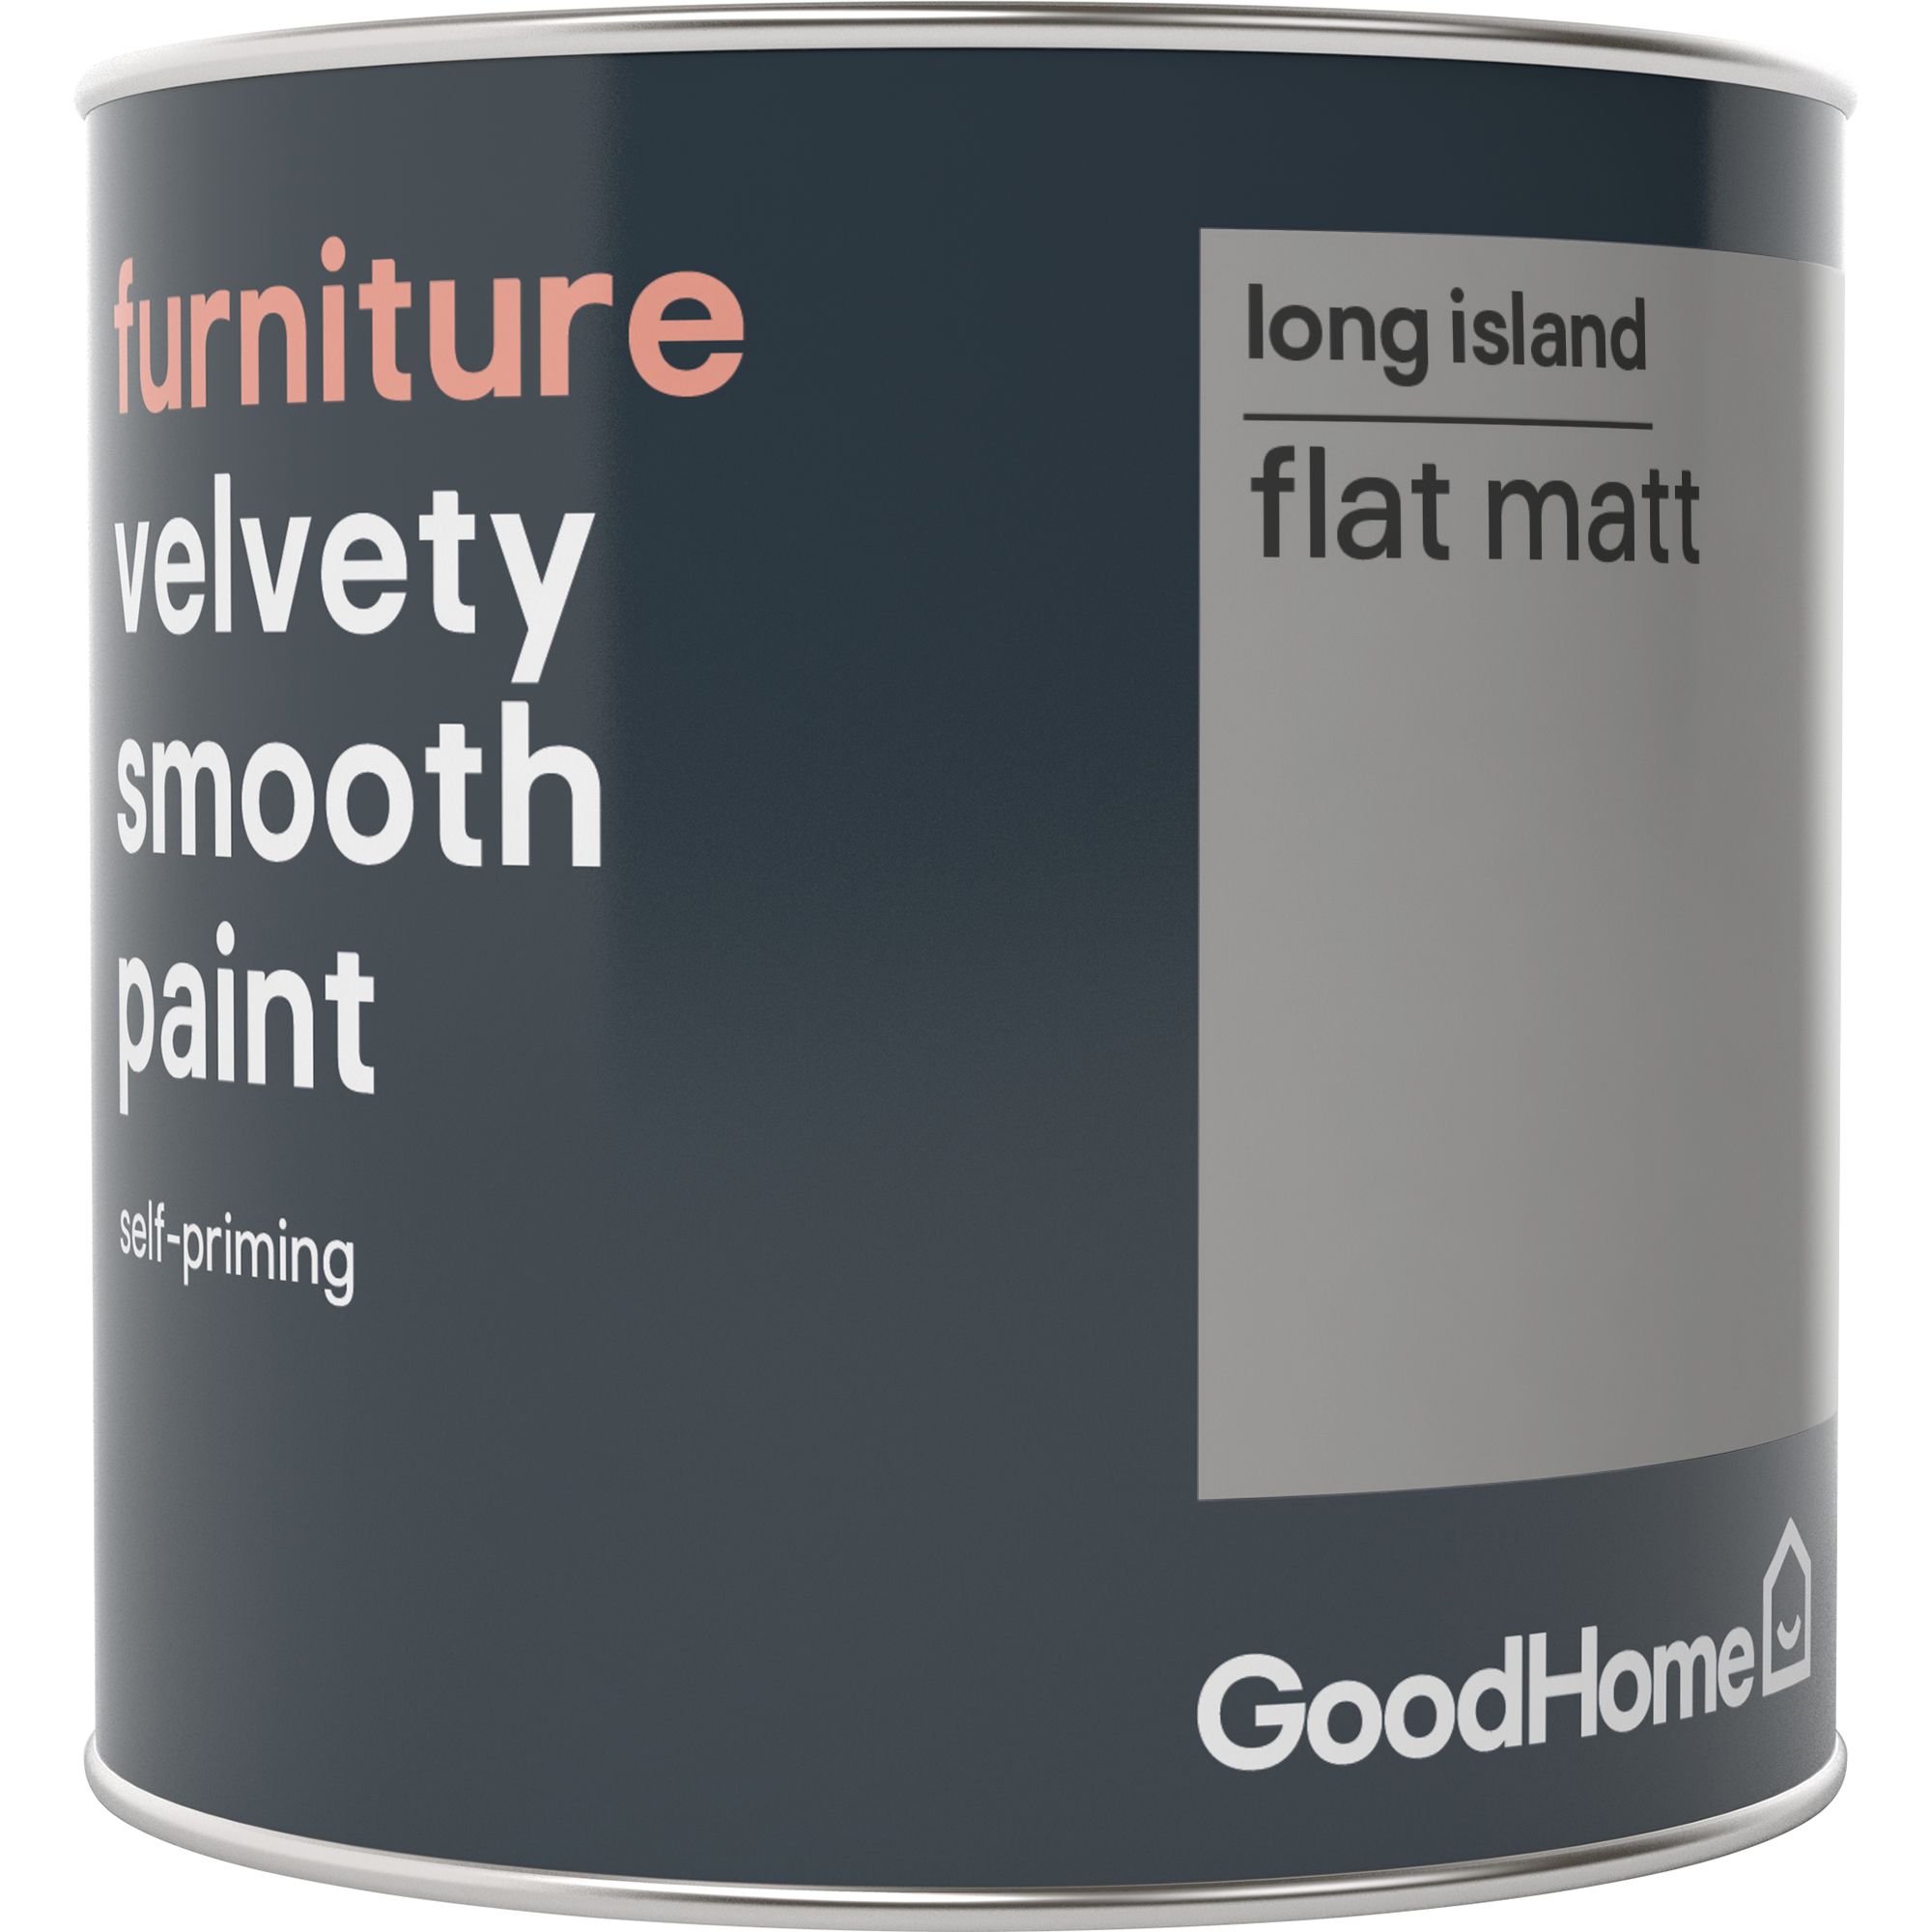 GoodHome Long island Flat matt Furniture paint, 500ml